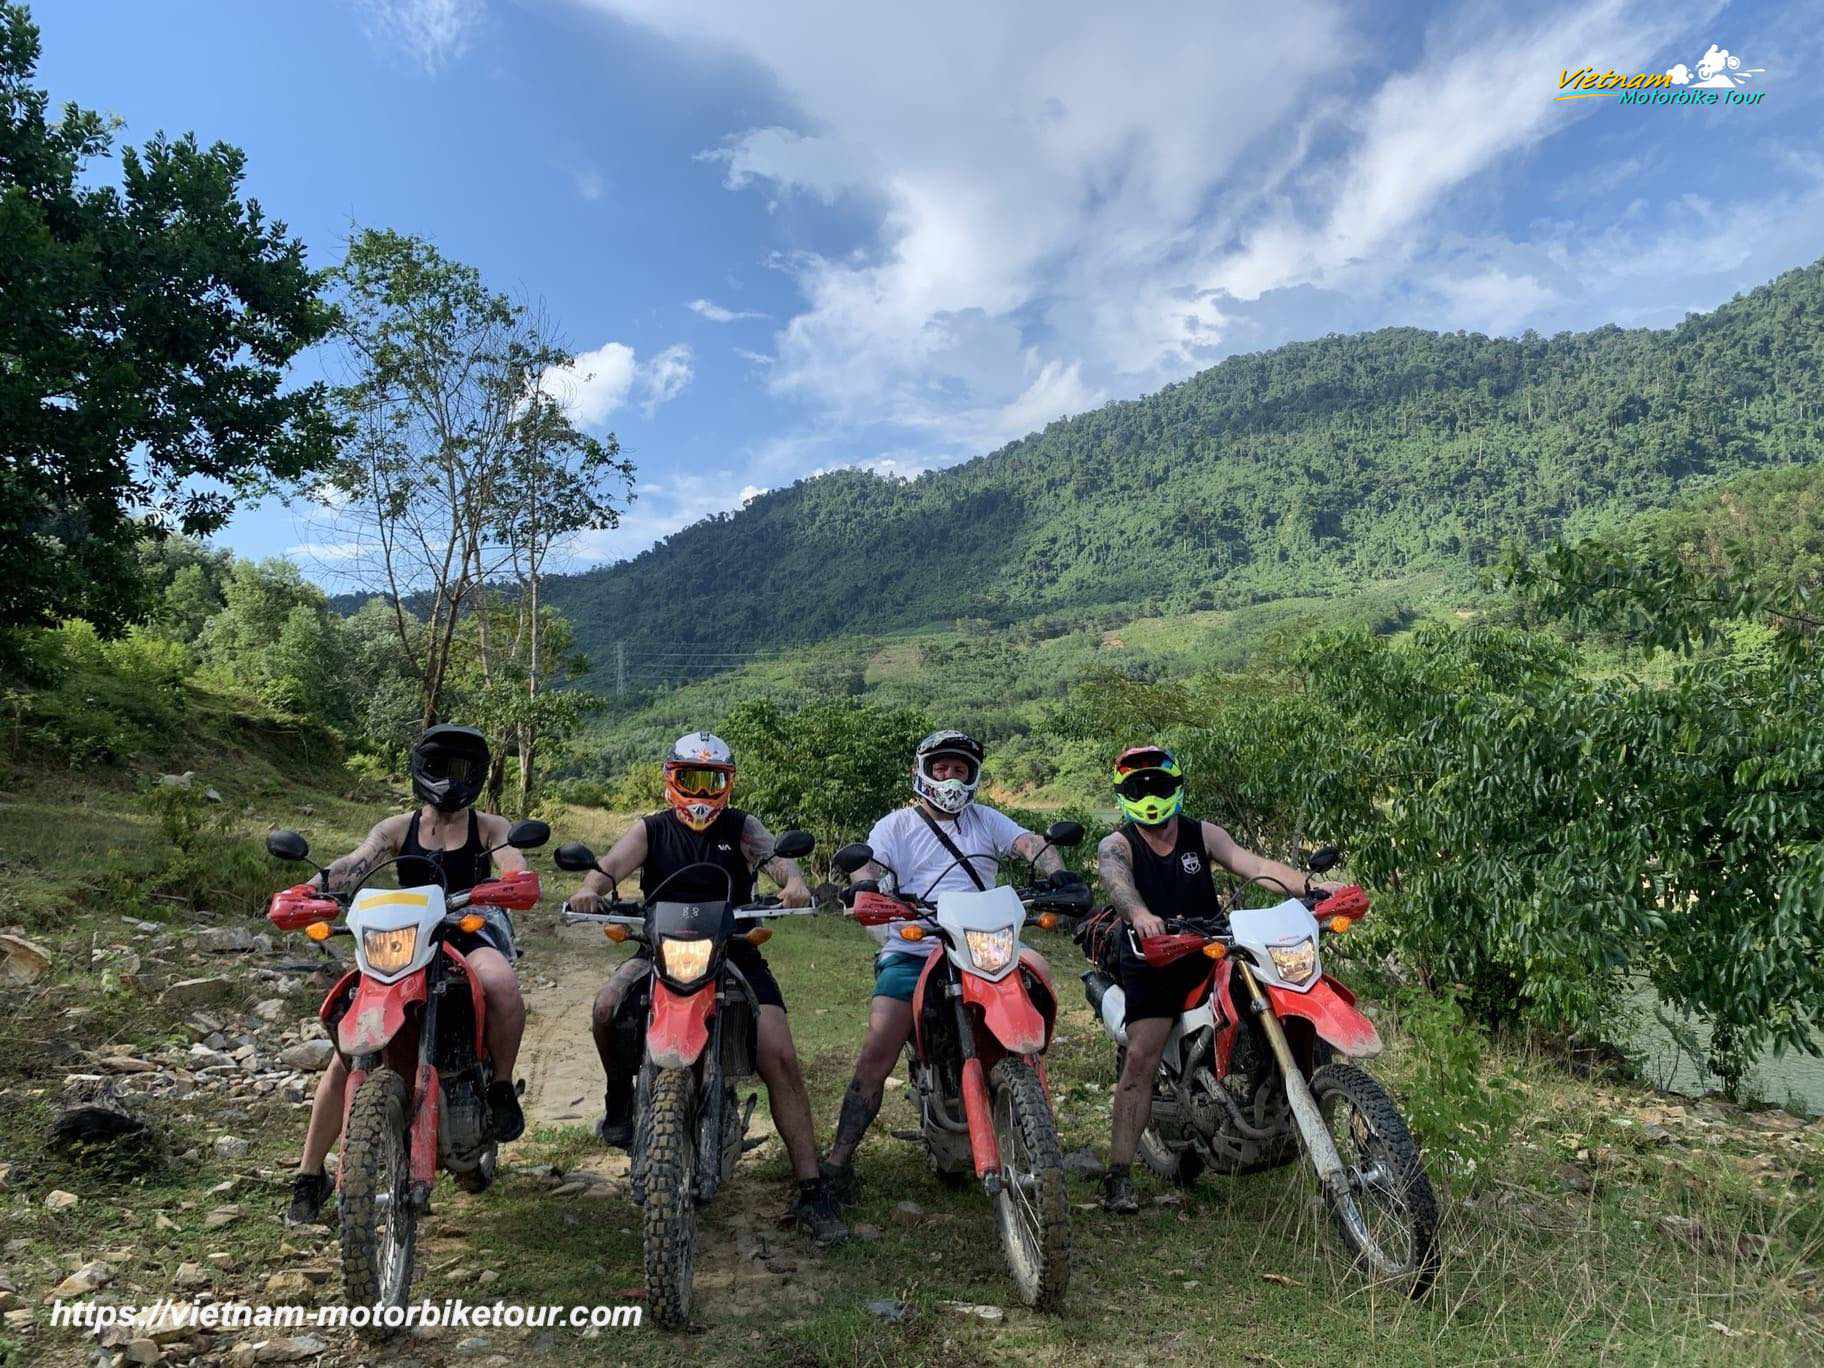 vietnam motorcycle tour to kon tum lak lake 10 - Beautiful Hoi An motorbike tour to Quang Ngai via Ho Chi Minh Trails